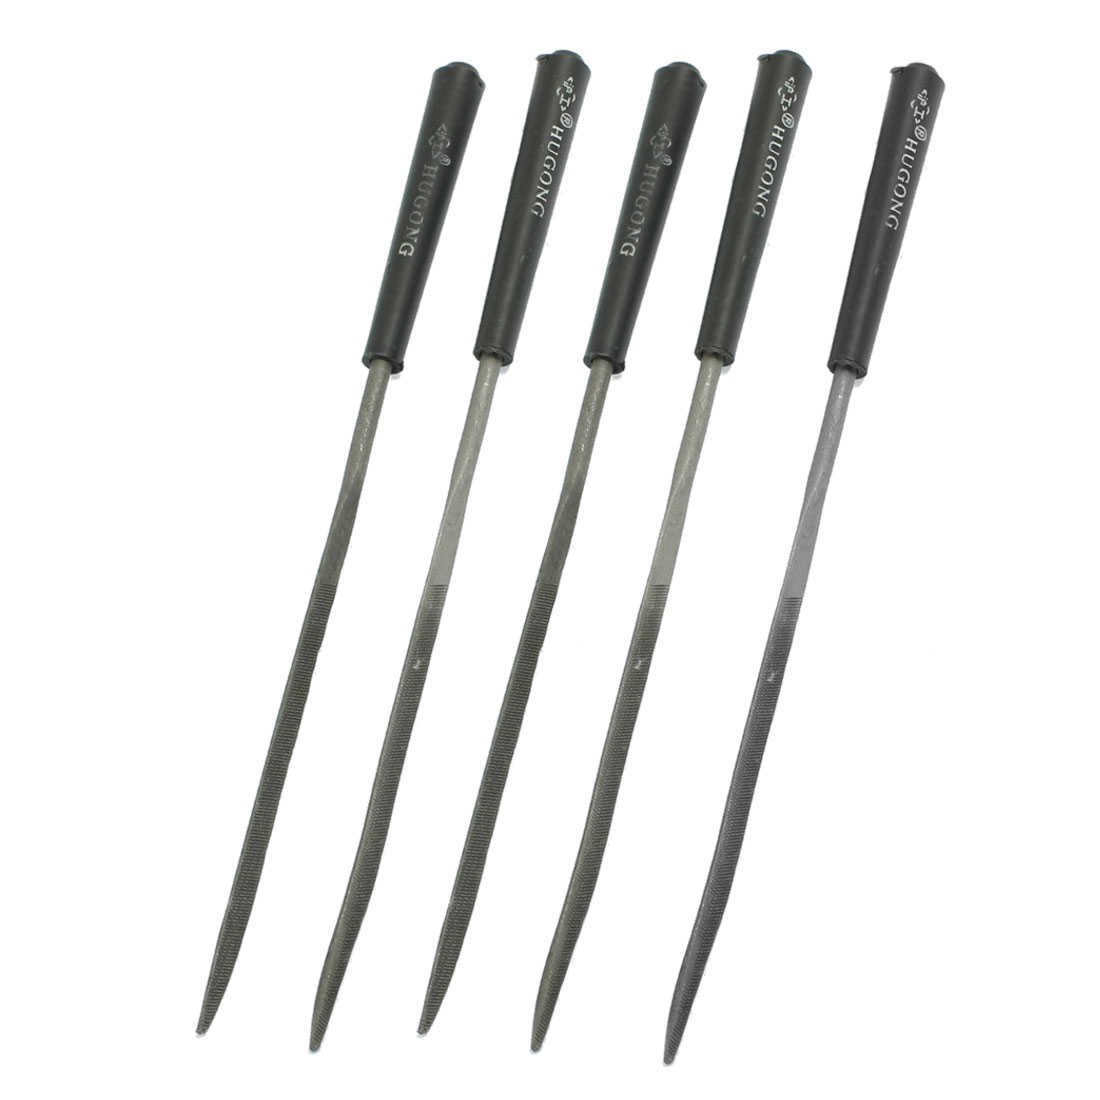 Unique Bargains Black Plastic Grip 3mm x 140mm Woodwork Triangle Needle Files Tool 5 Pcs